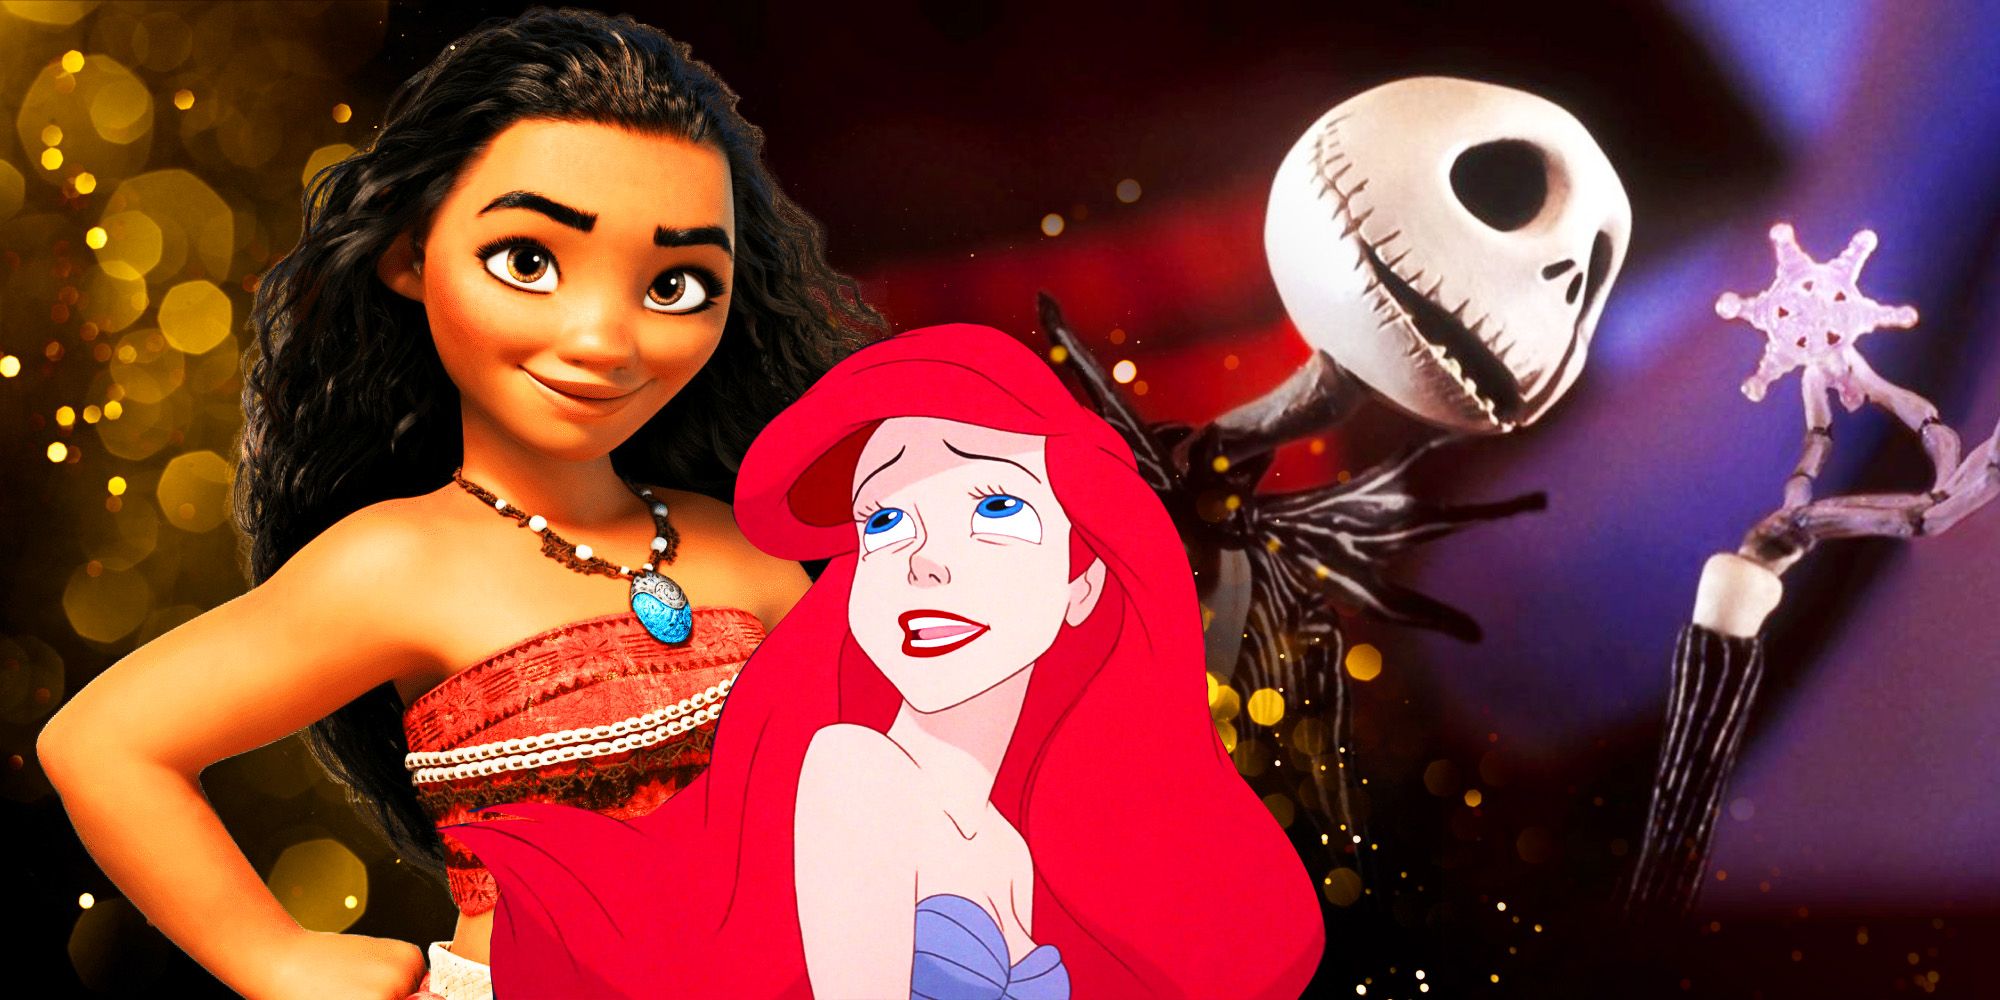 Disney Princesses Moana and Ariel transposed next to The Nightmare Before Christmas' Jack Skellington